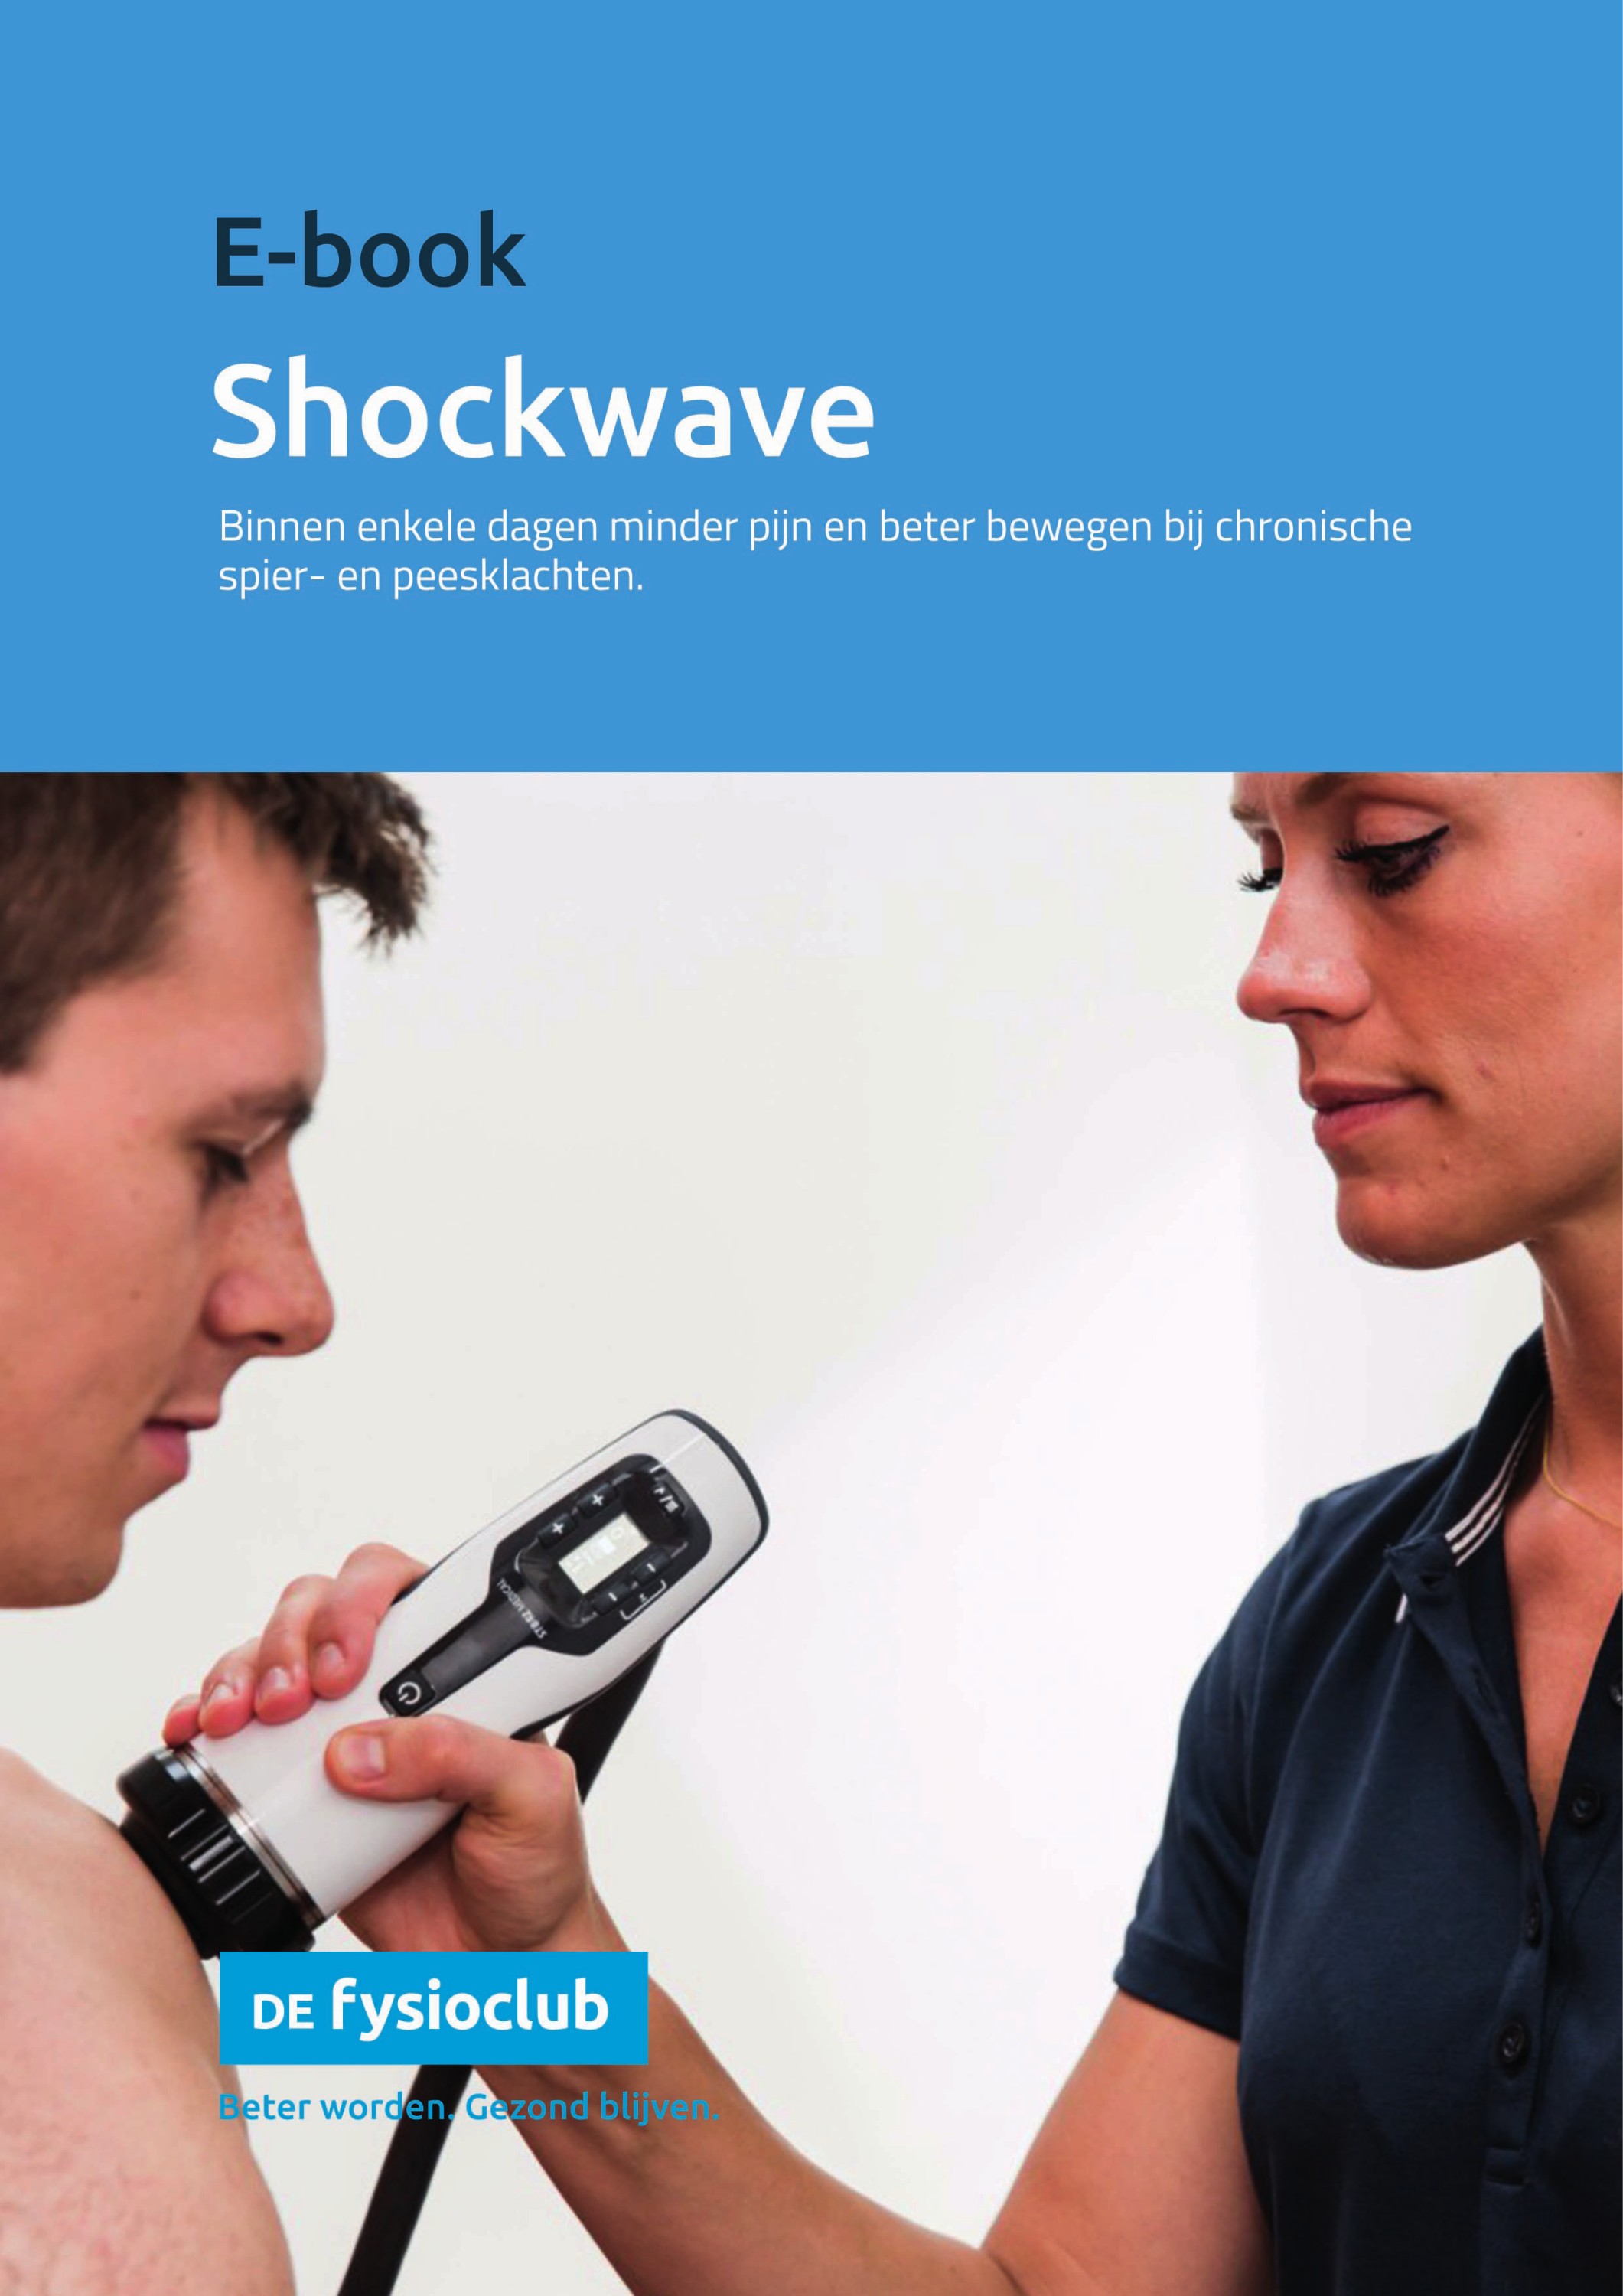 Shockwave therapie